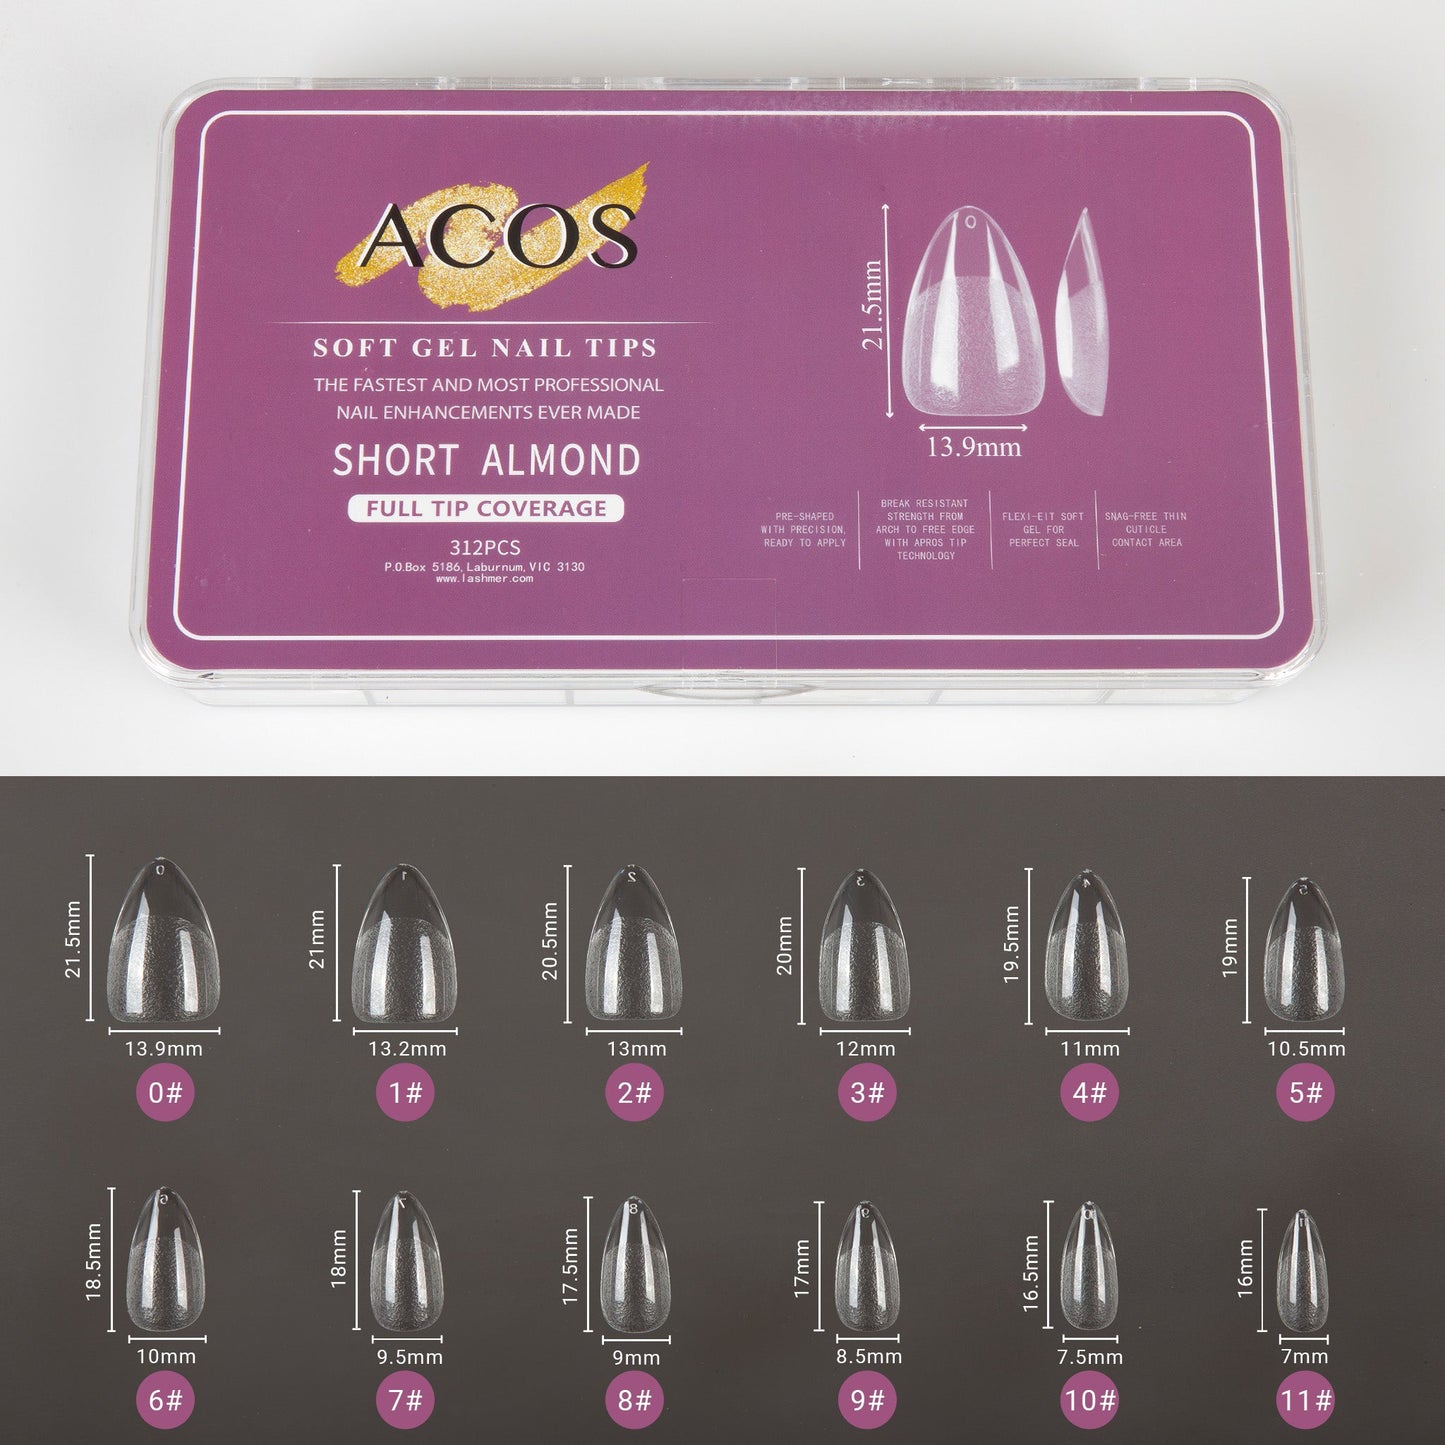 ACOS Soft Gel Nail Tips (Full Tip Coverage) - ALMOND Shape (312pcs/box) - Lashmer